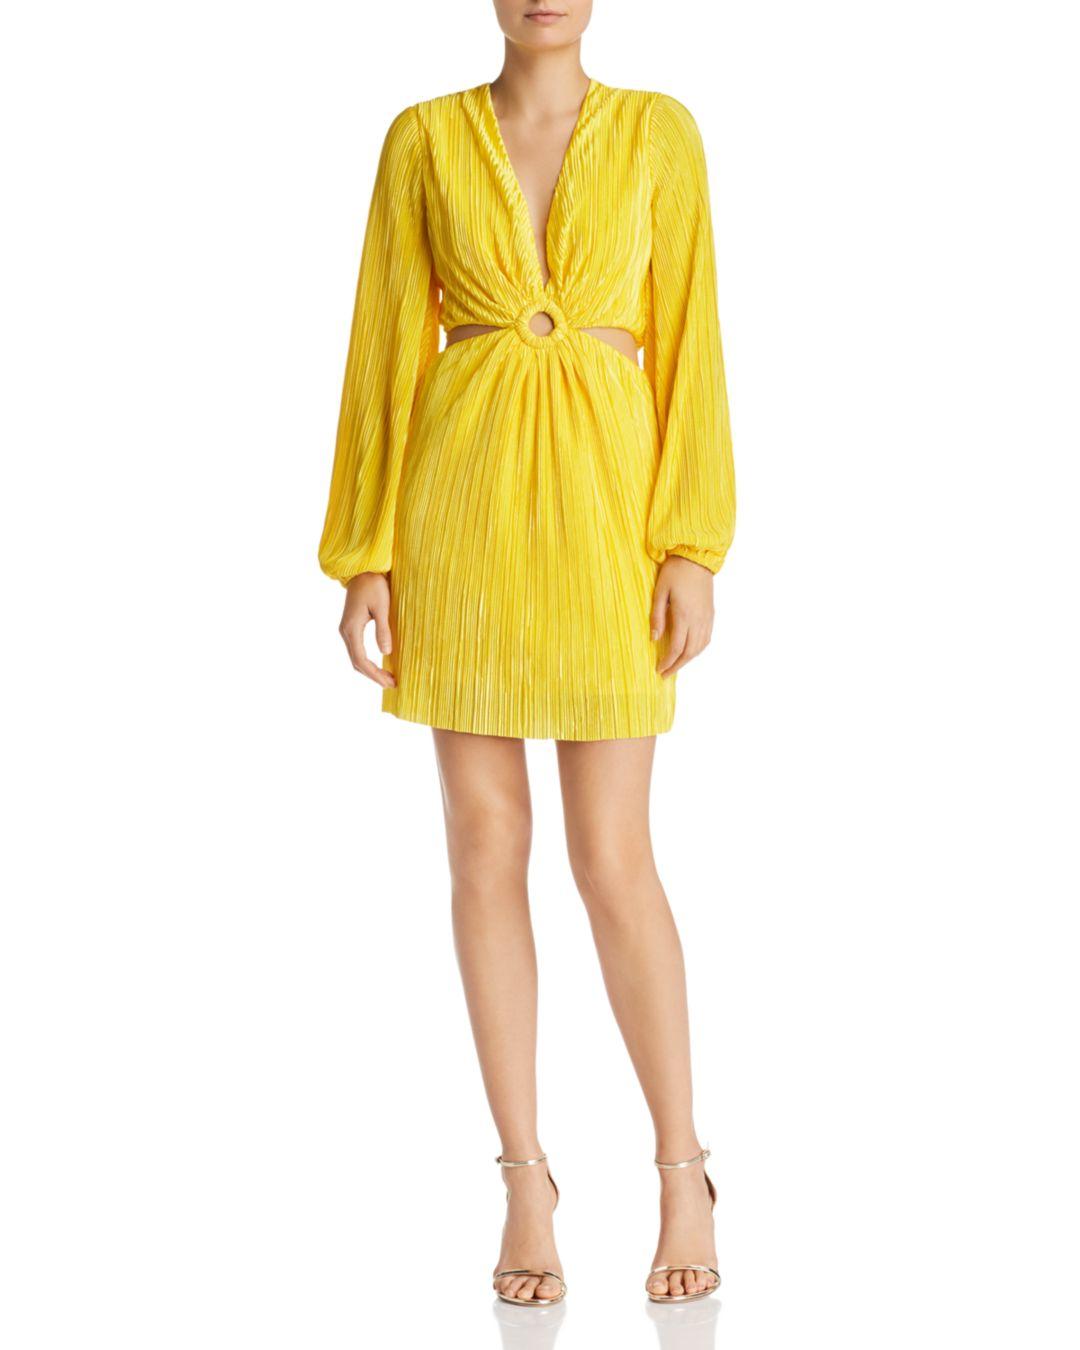 Lyst - Ronny Kobo Nira Plissé Cutout Dress in Yellow